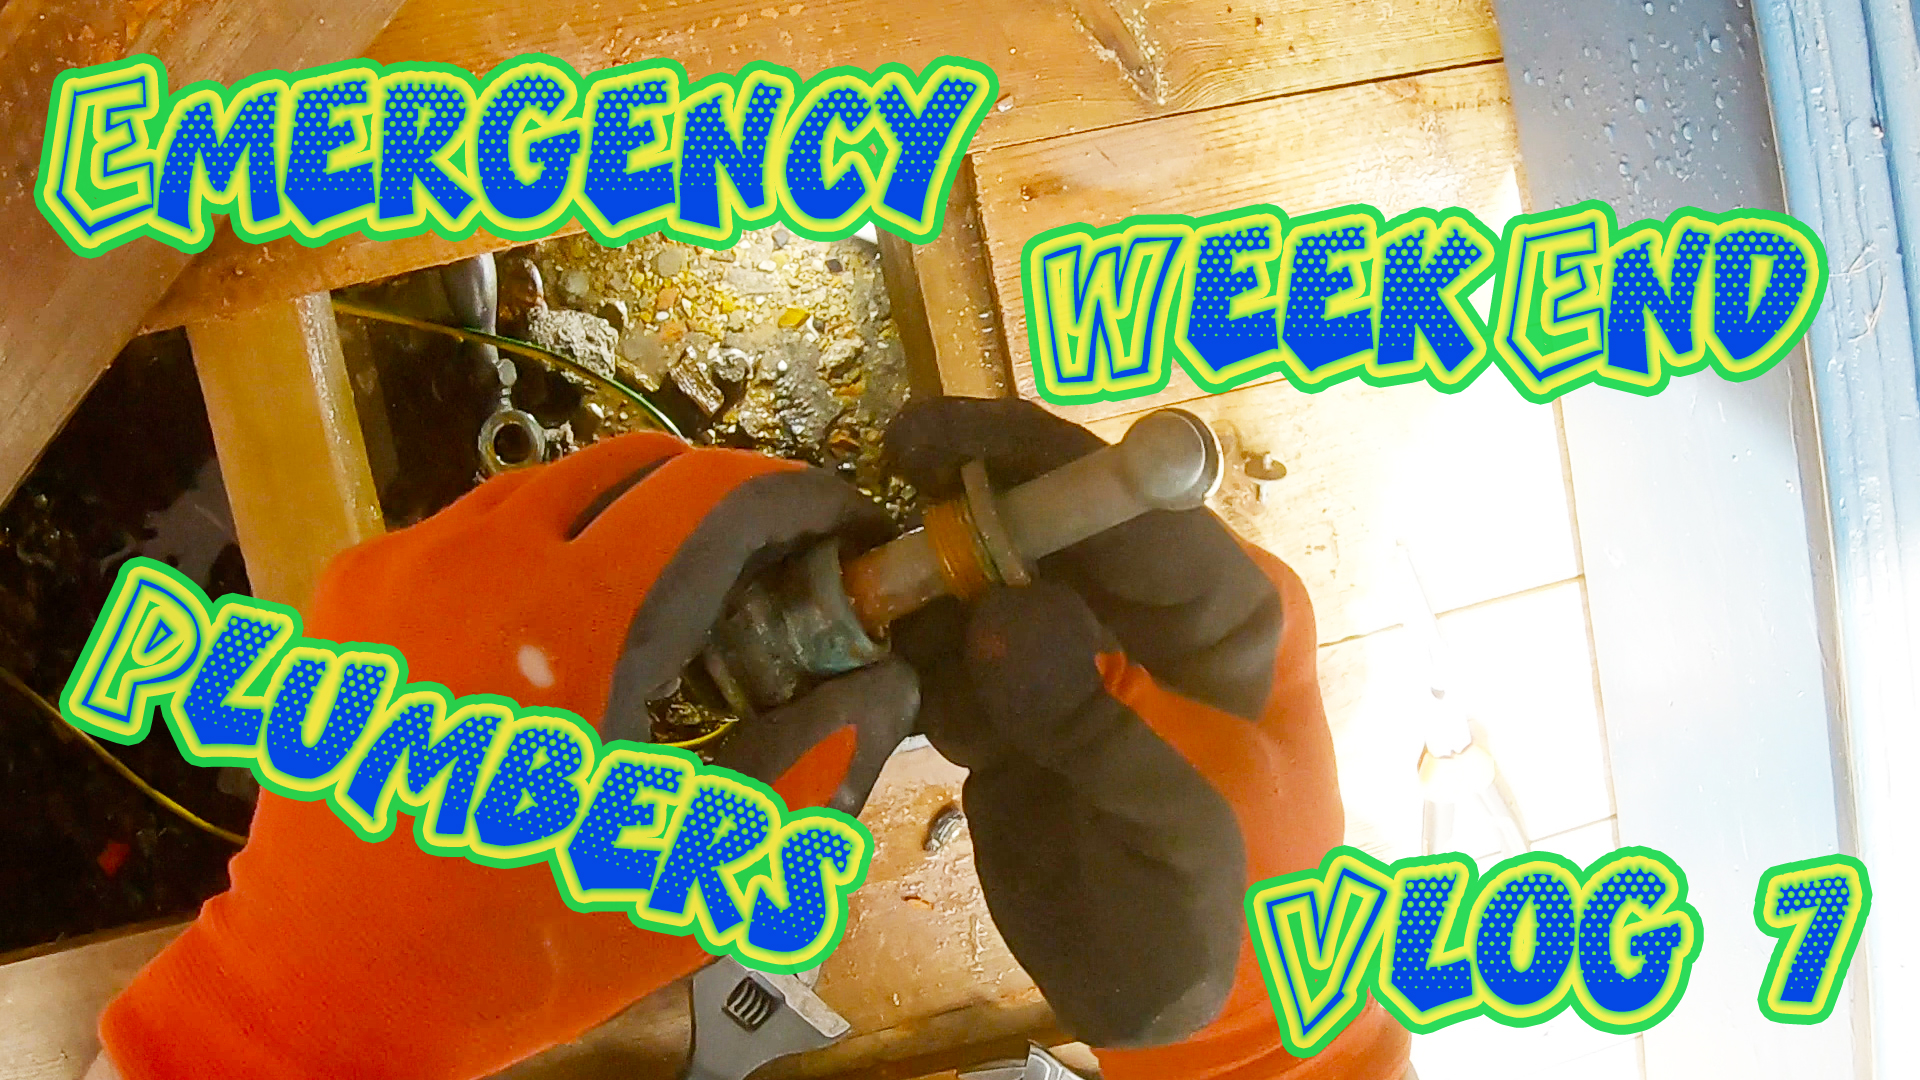 Emergency Plumber London Vlog 7 YouTube Thumbnail